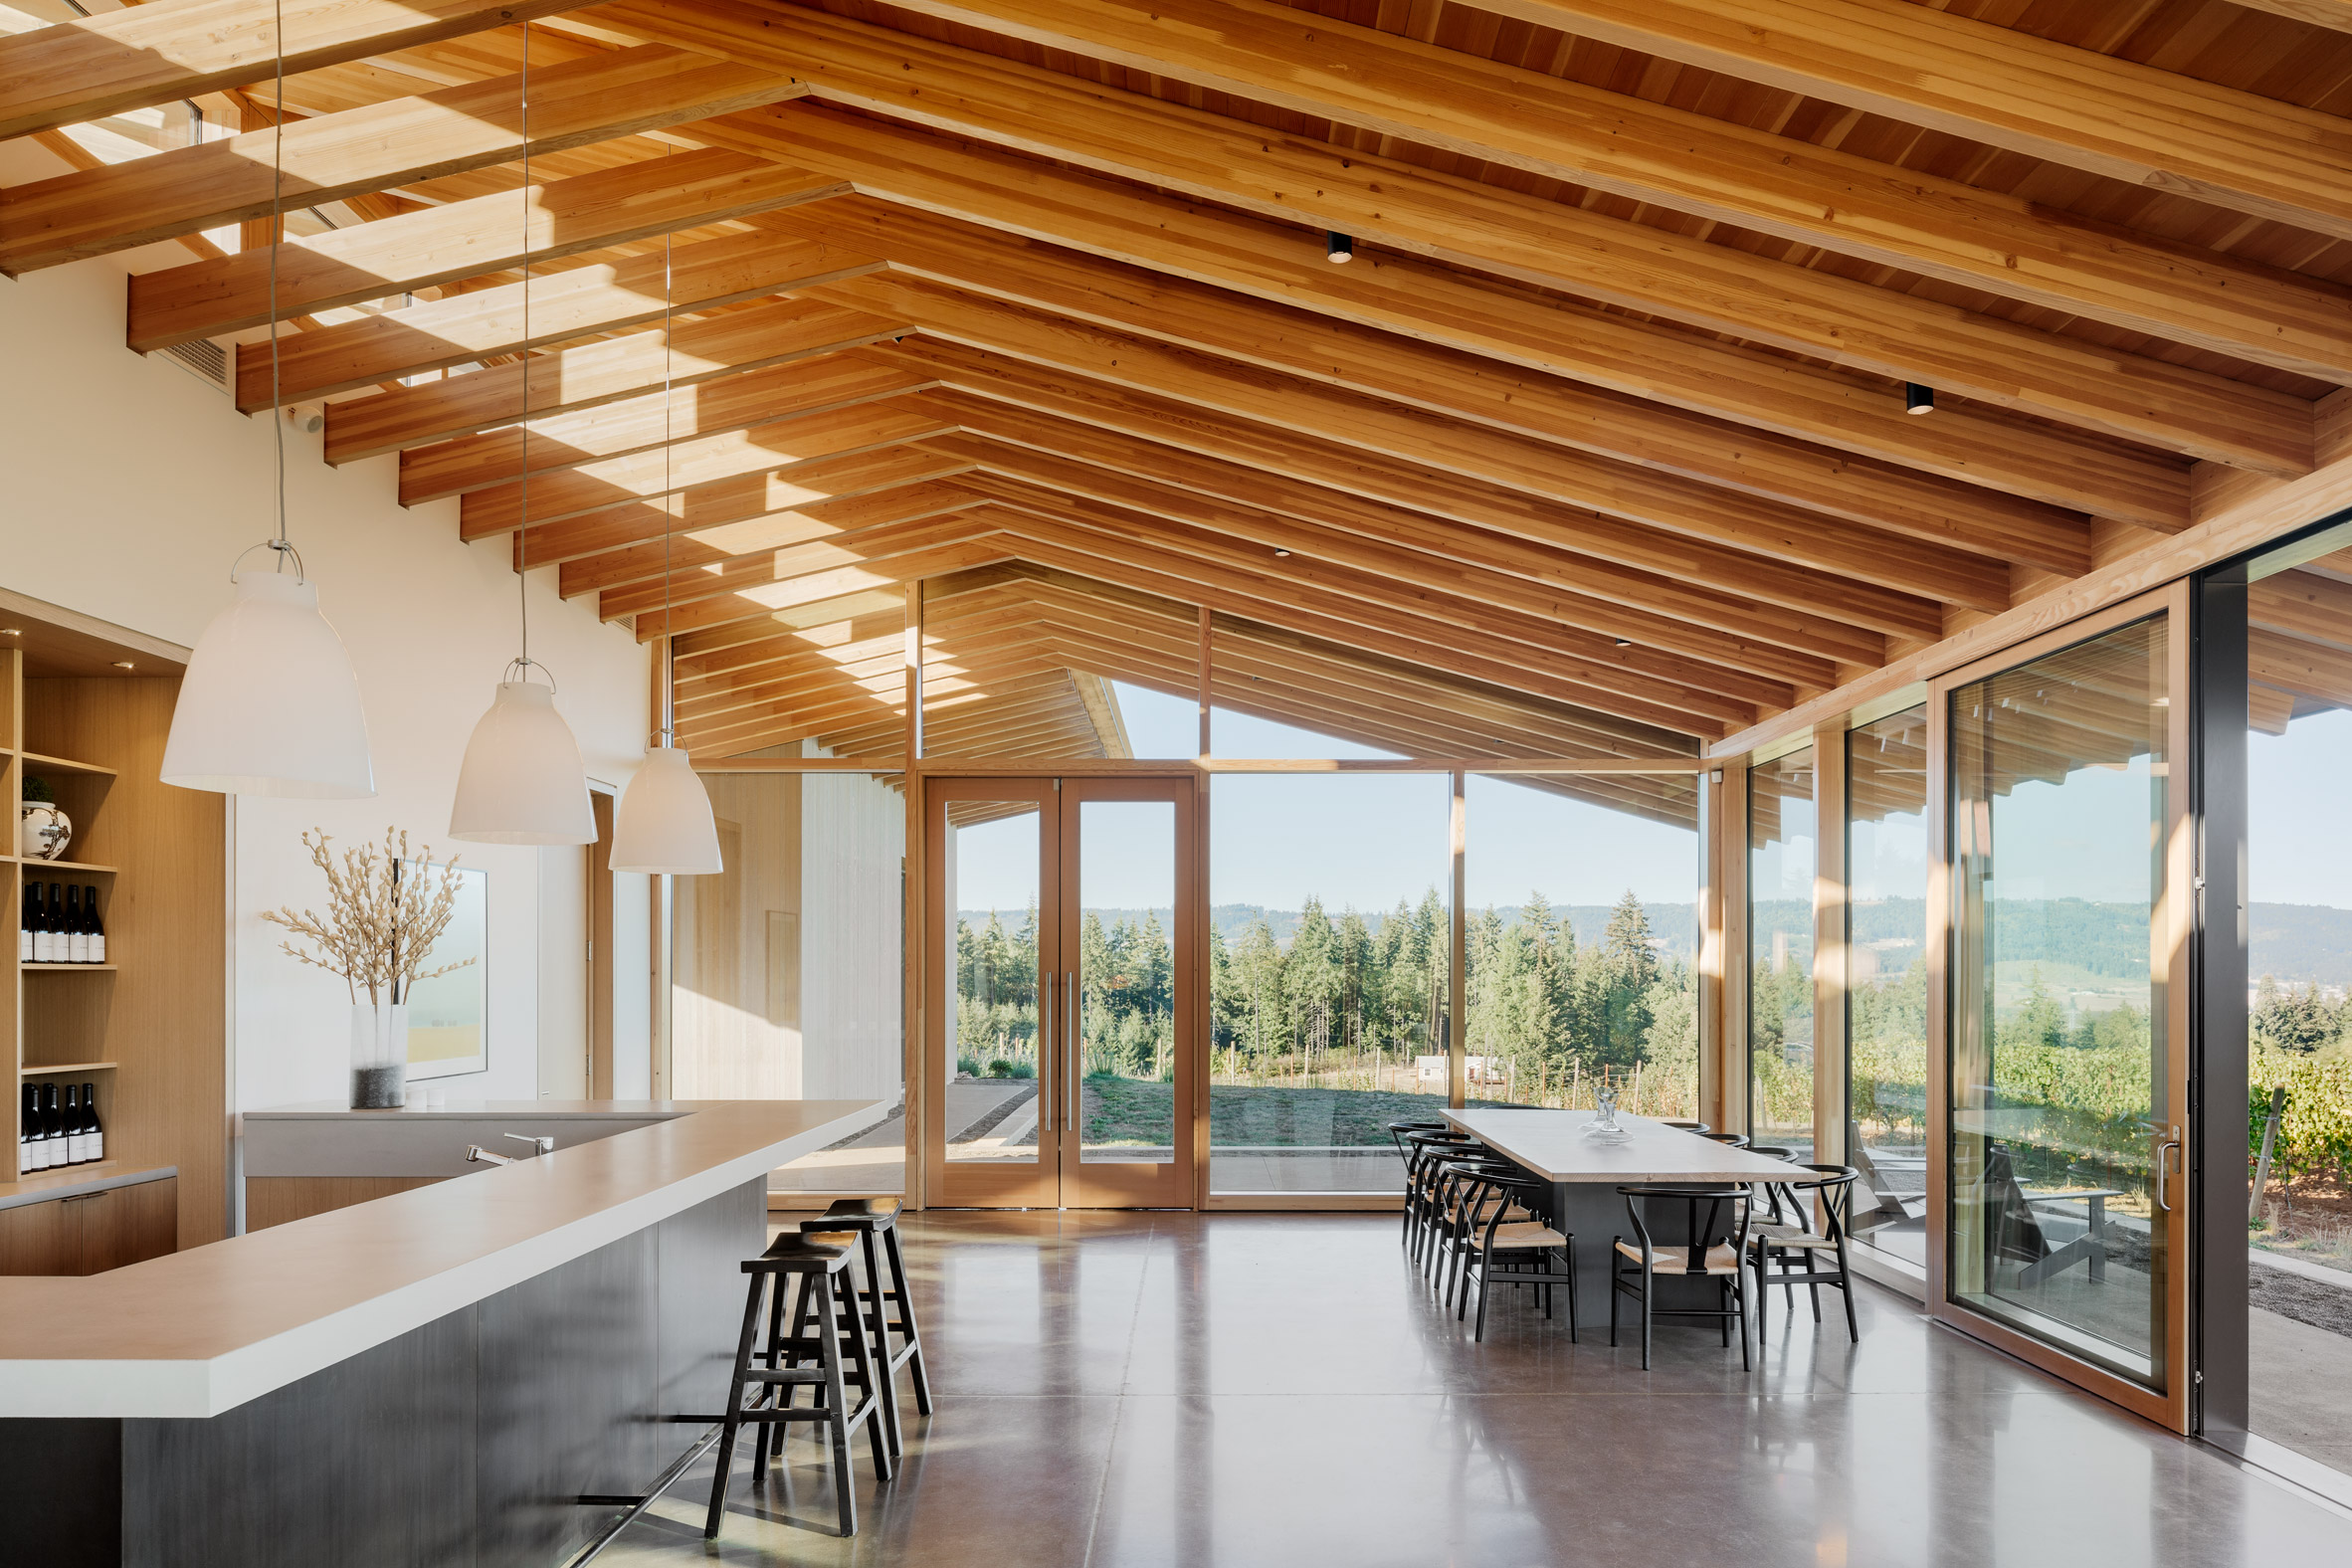 Lever Architecture designs Stunning Wine Tasting Room in Oregon